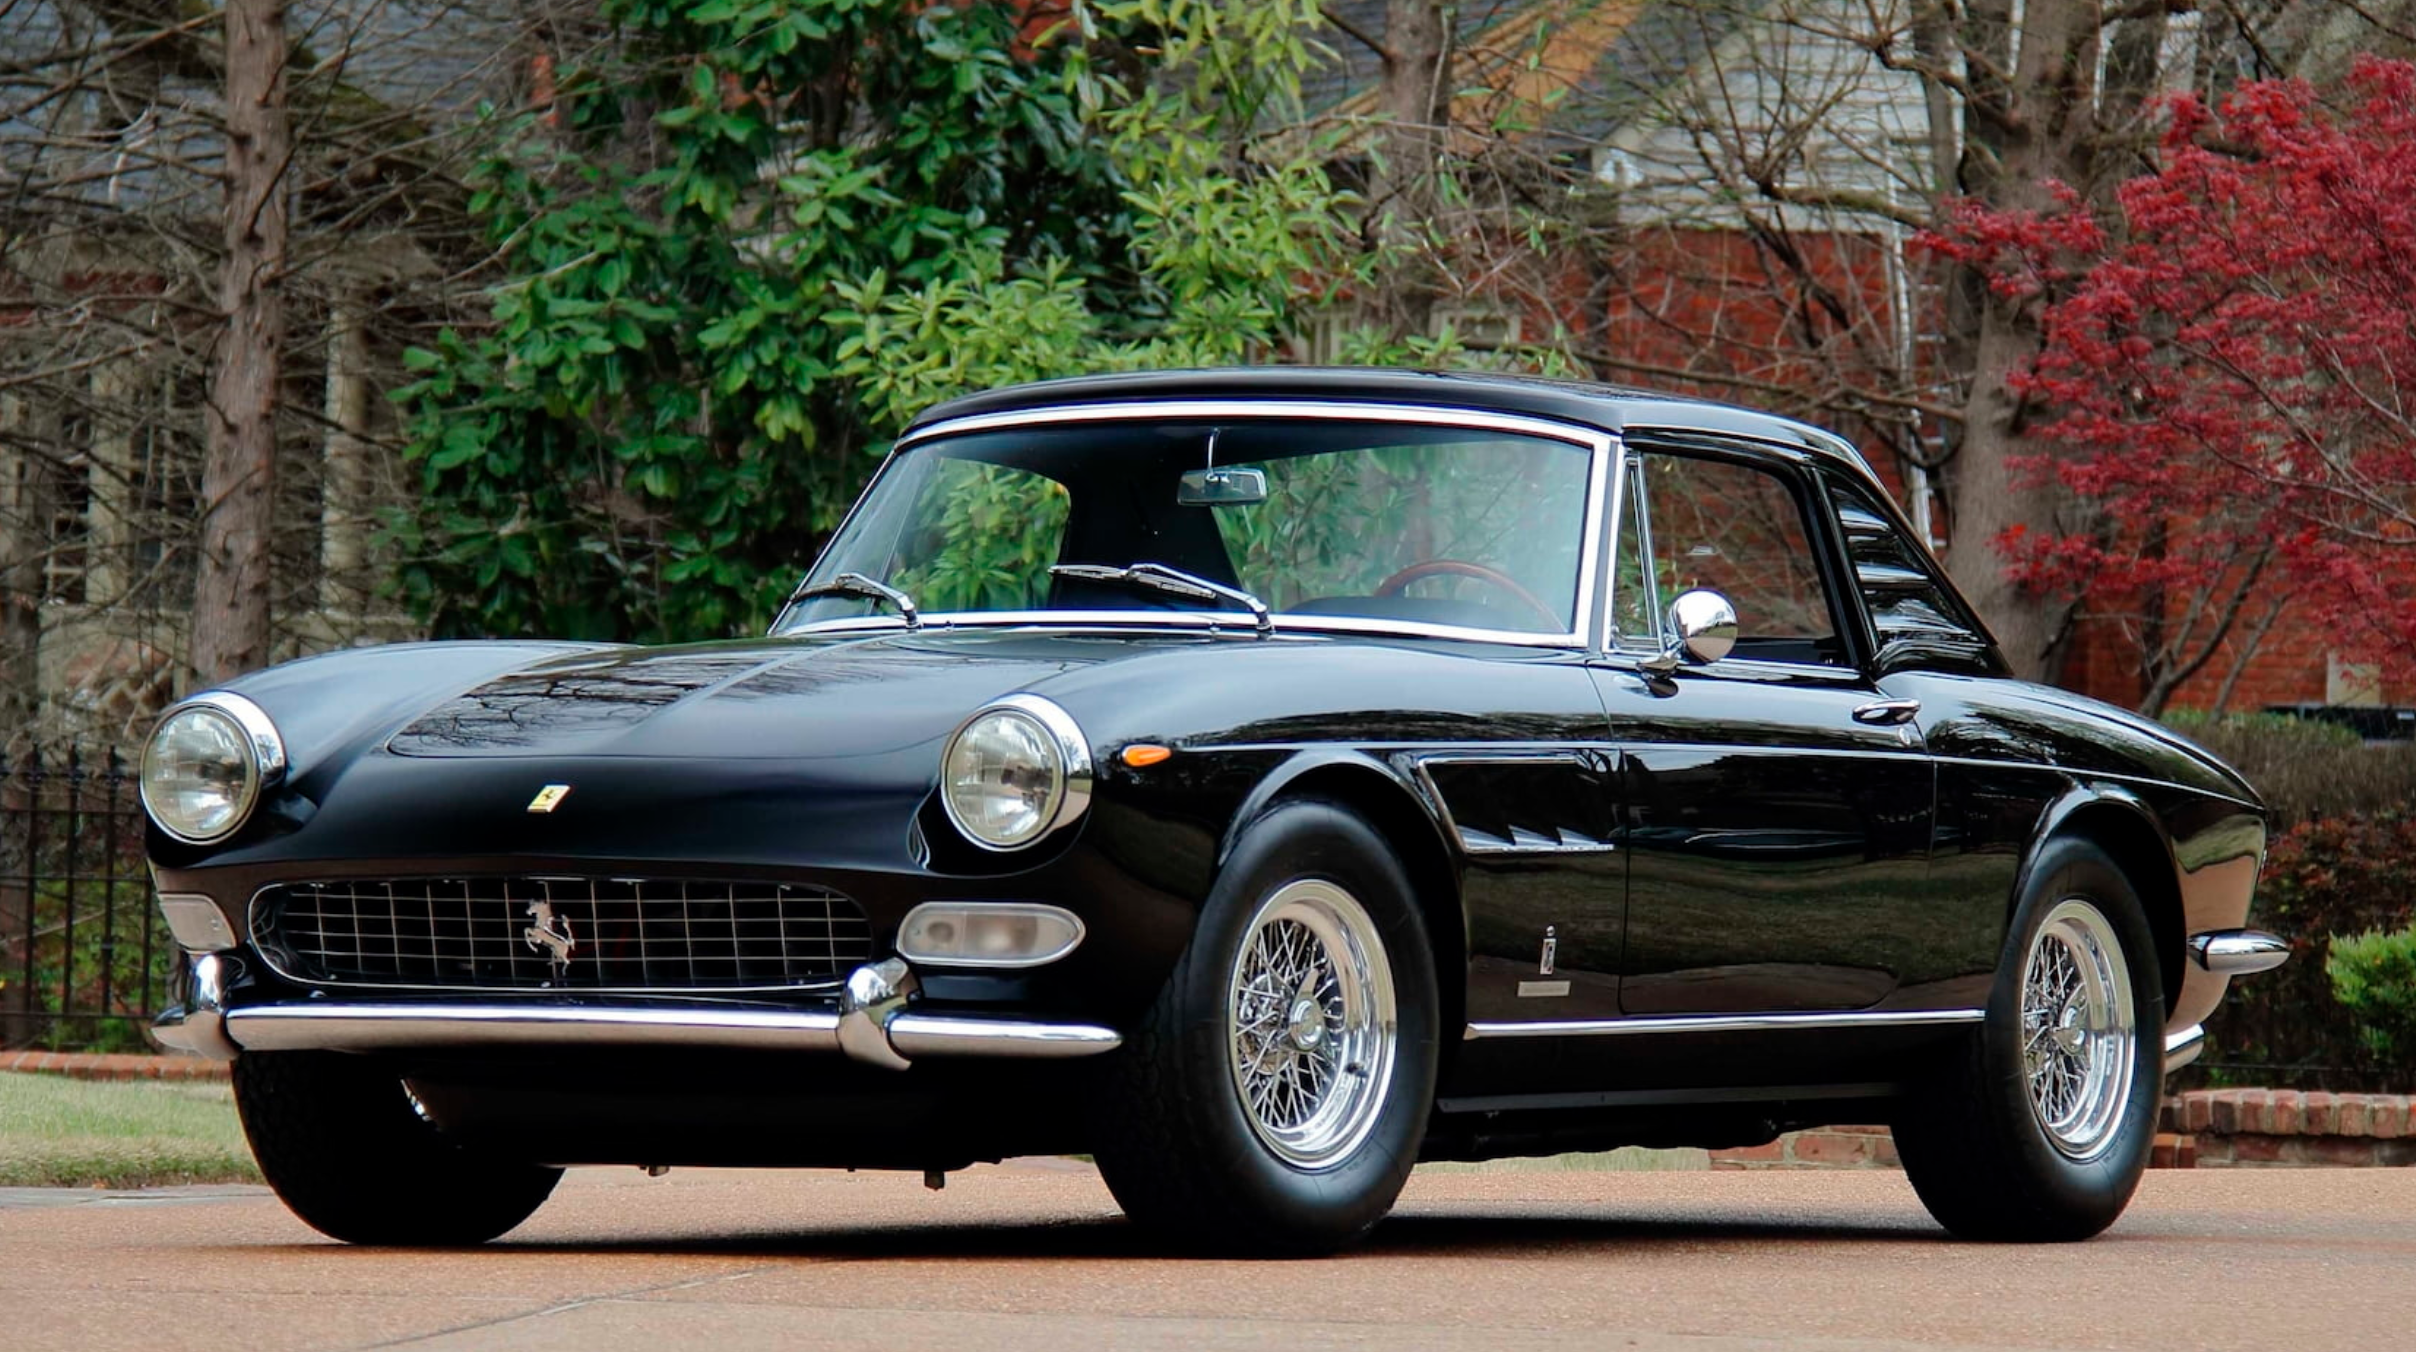 <img src="1965-ferrari-275.png" alt="A 1965 Ferrari 275 GTS once owned by David Letterman and Jon Shirley">